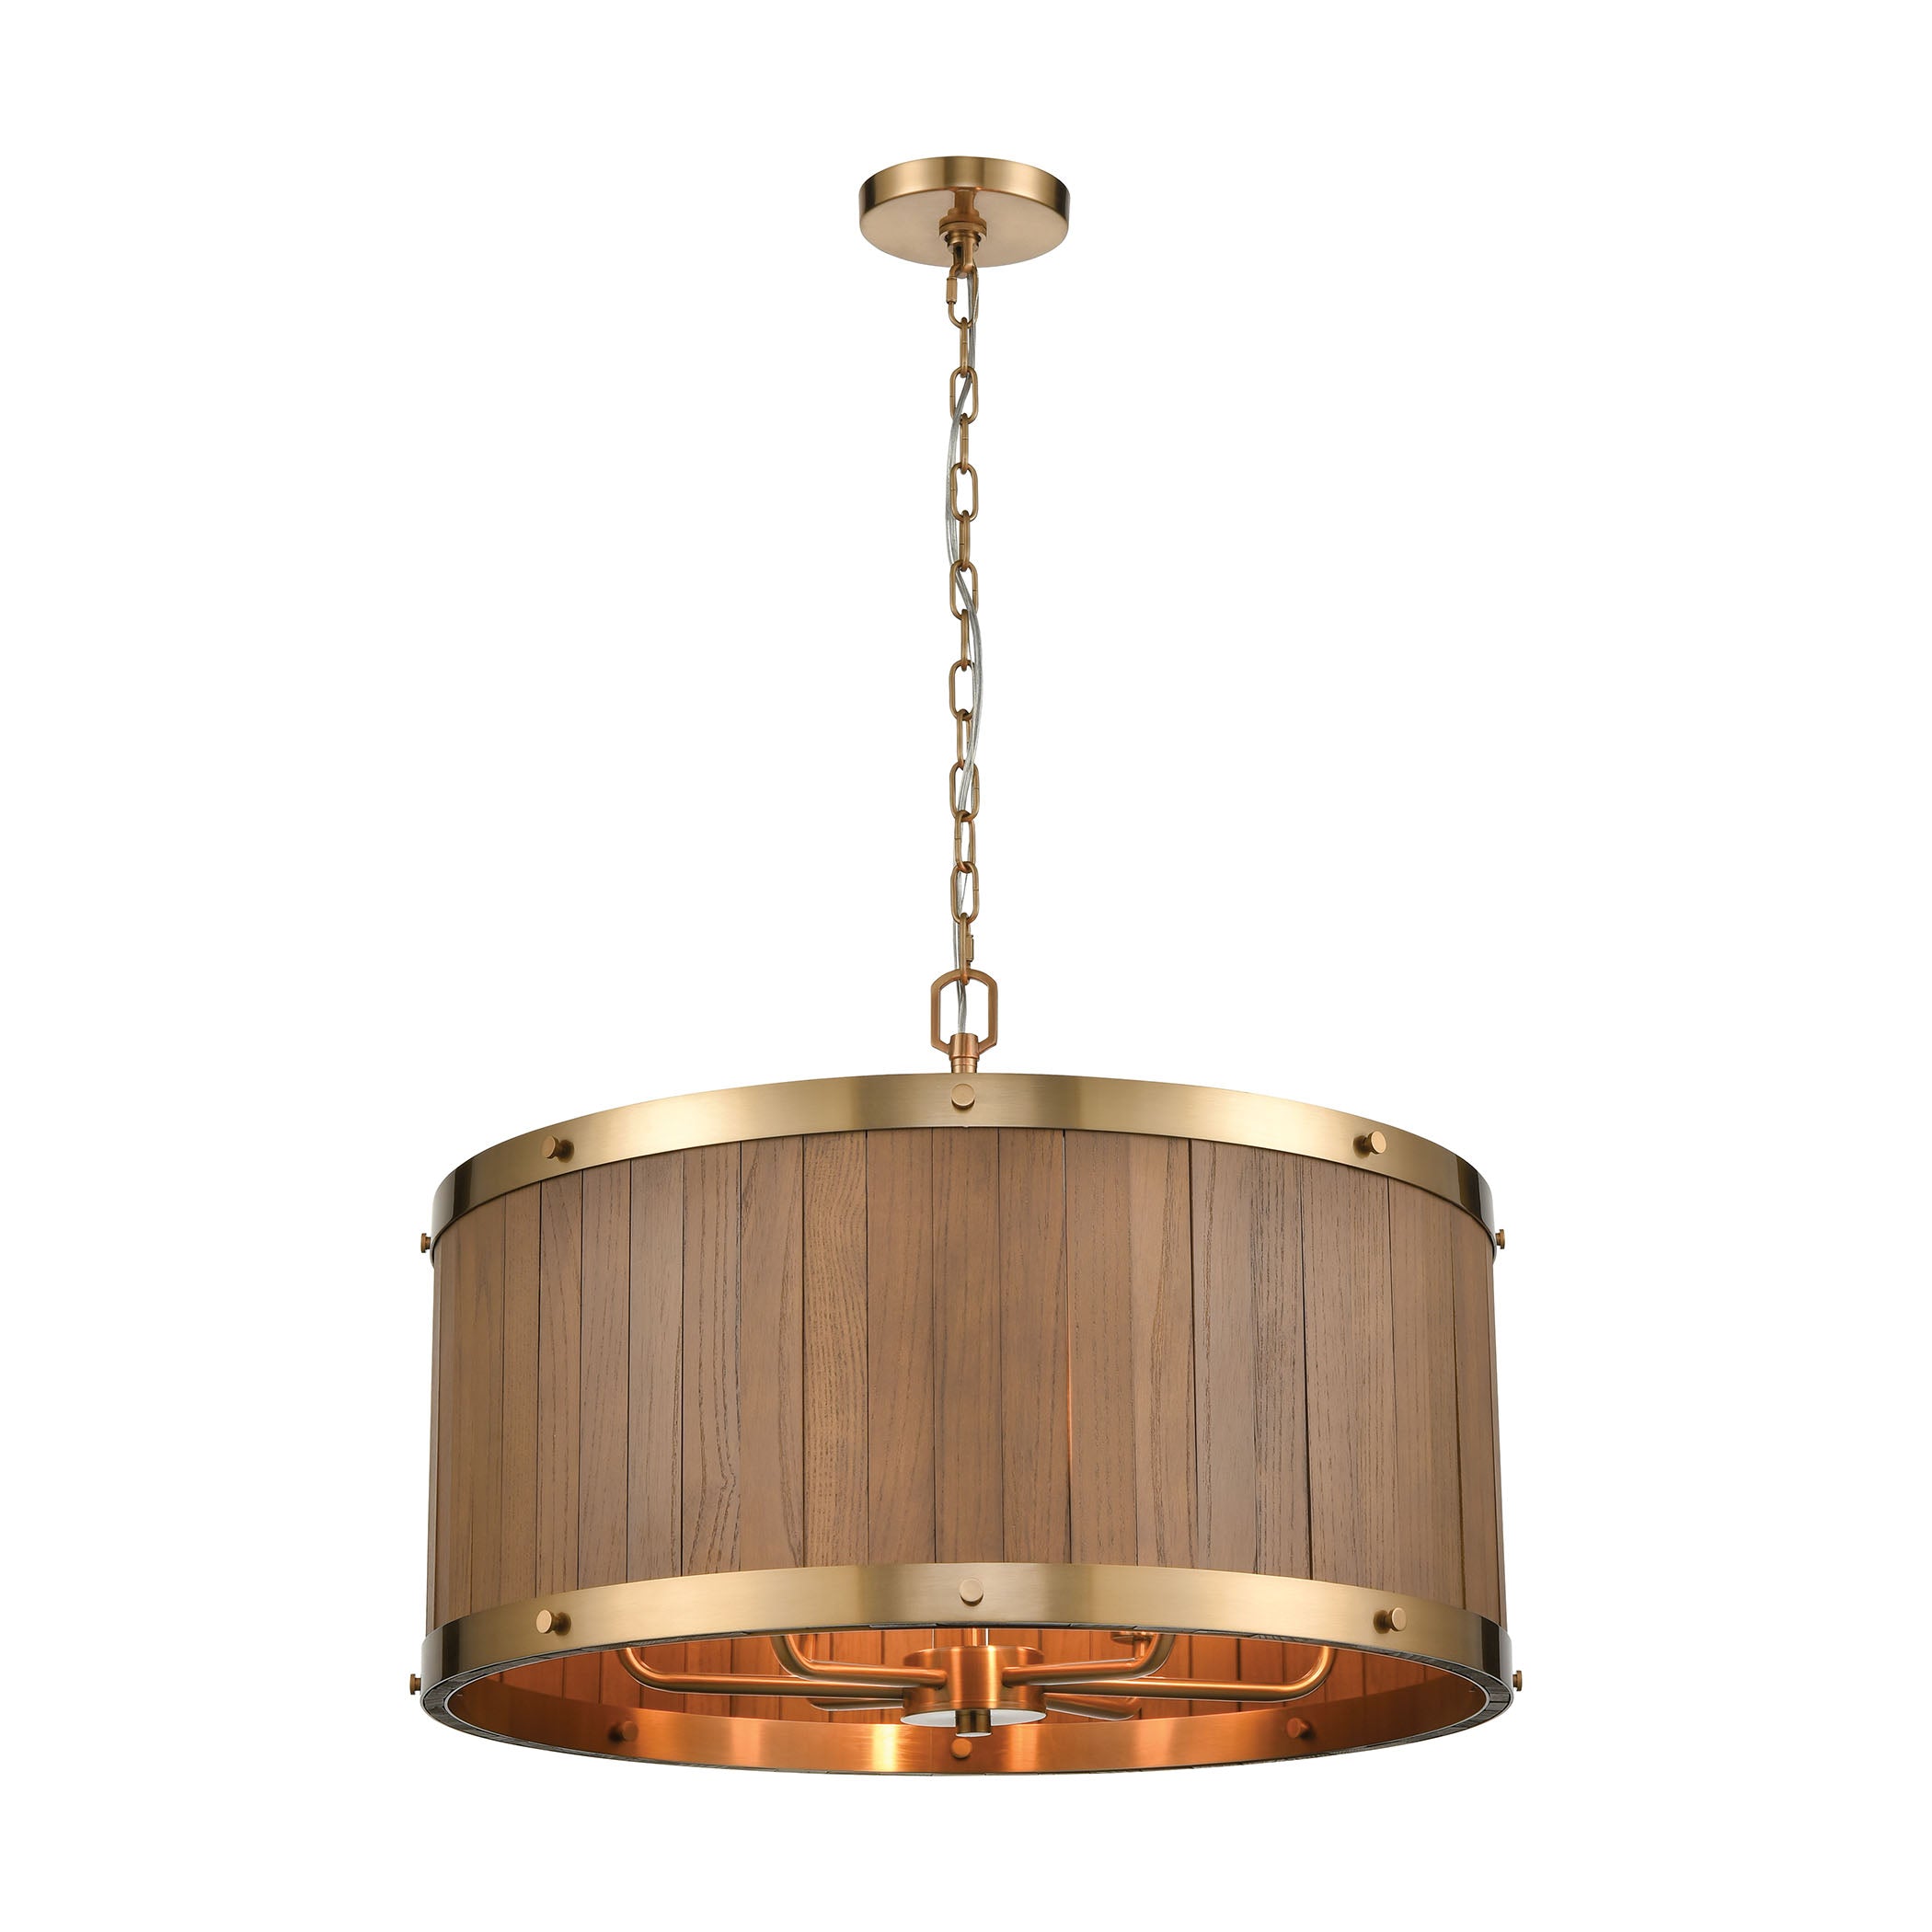 ELK Lighting 33376/6 Wooden Barrel 6-Light Chandelier in Satin Brass with Slatted Wood Shade in Medium Oak